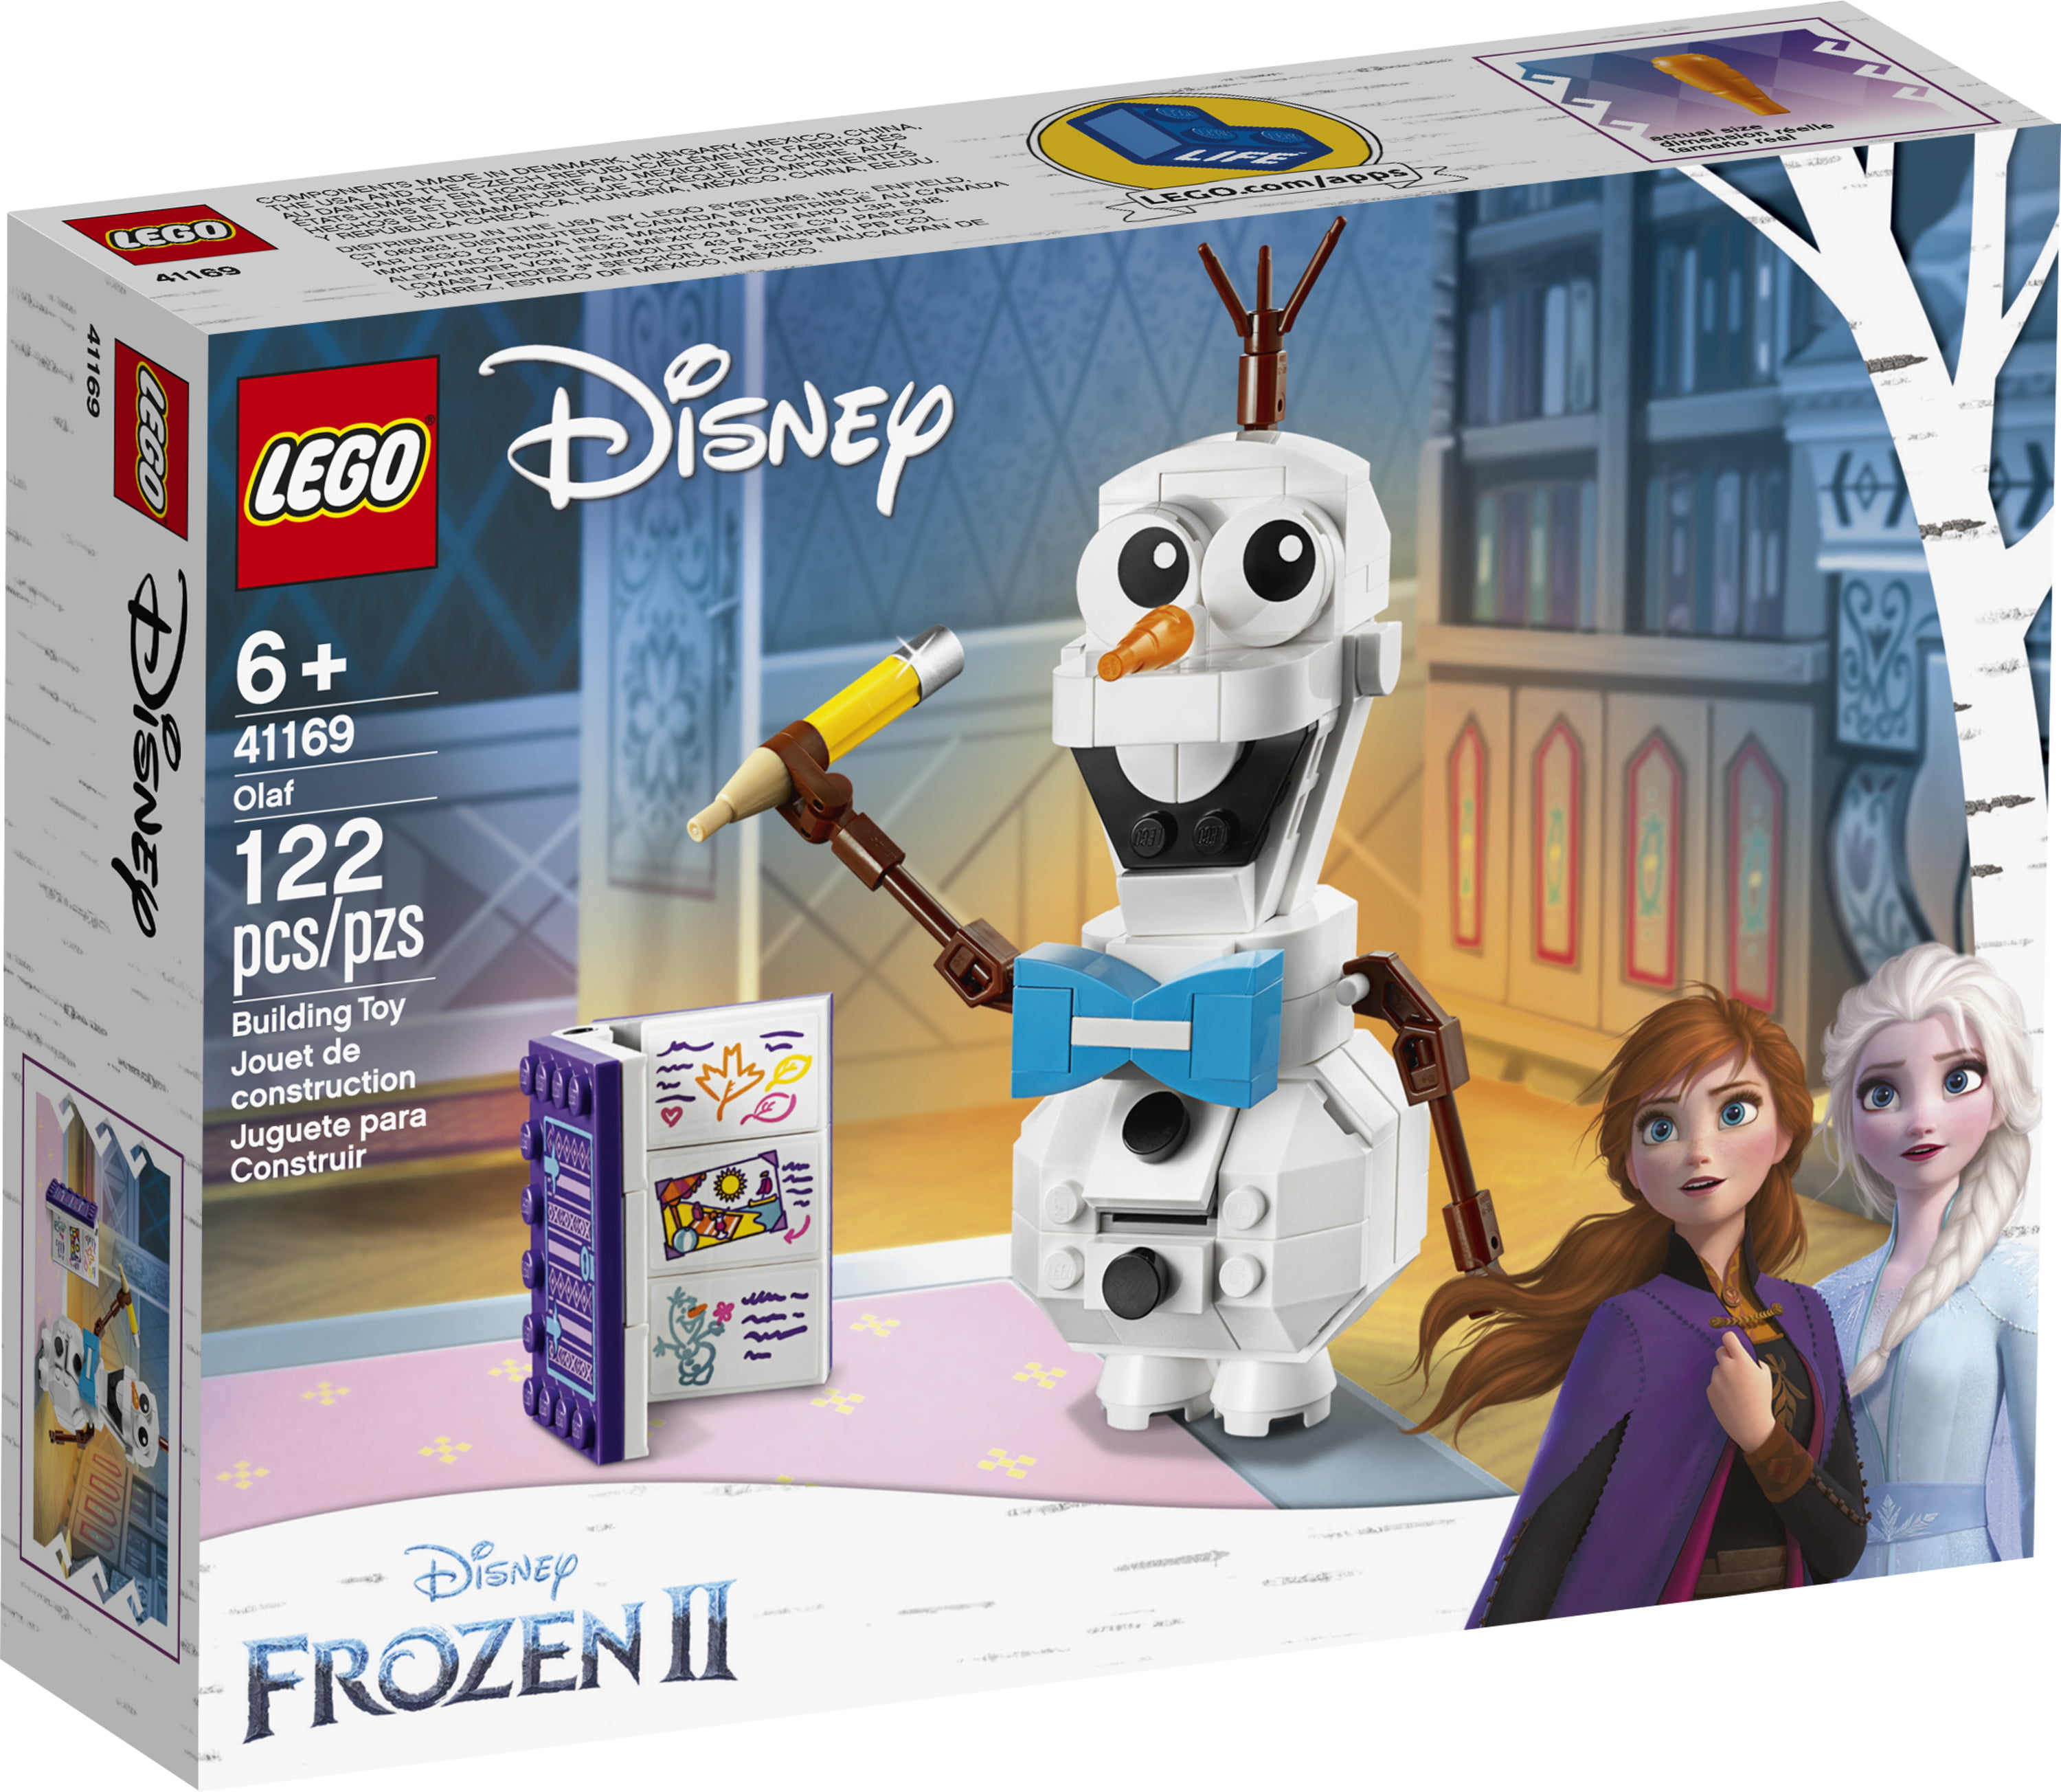 Depression matematiker Udover LEGO Disney Frozen II Olaf the Snowman 41169 Building Toy for Frozen Fans  (122 pieces) - Walmart.com